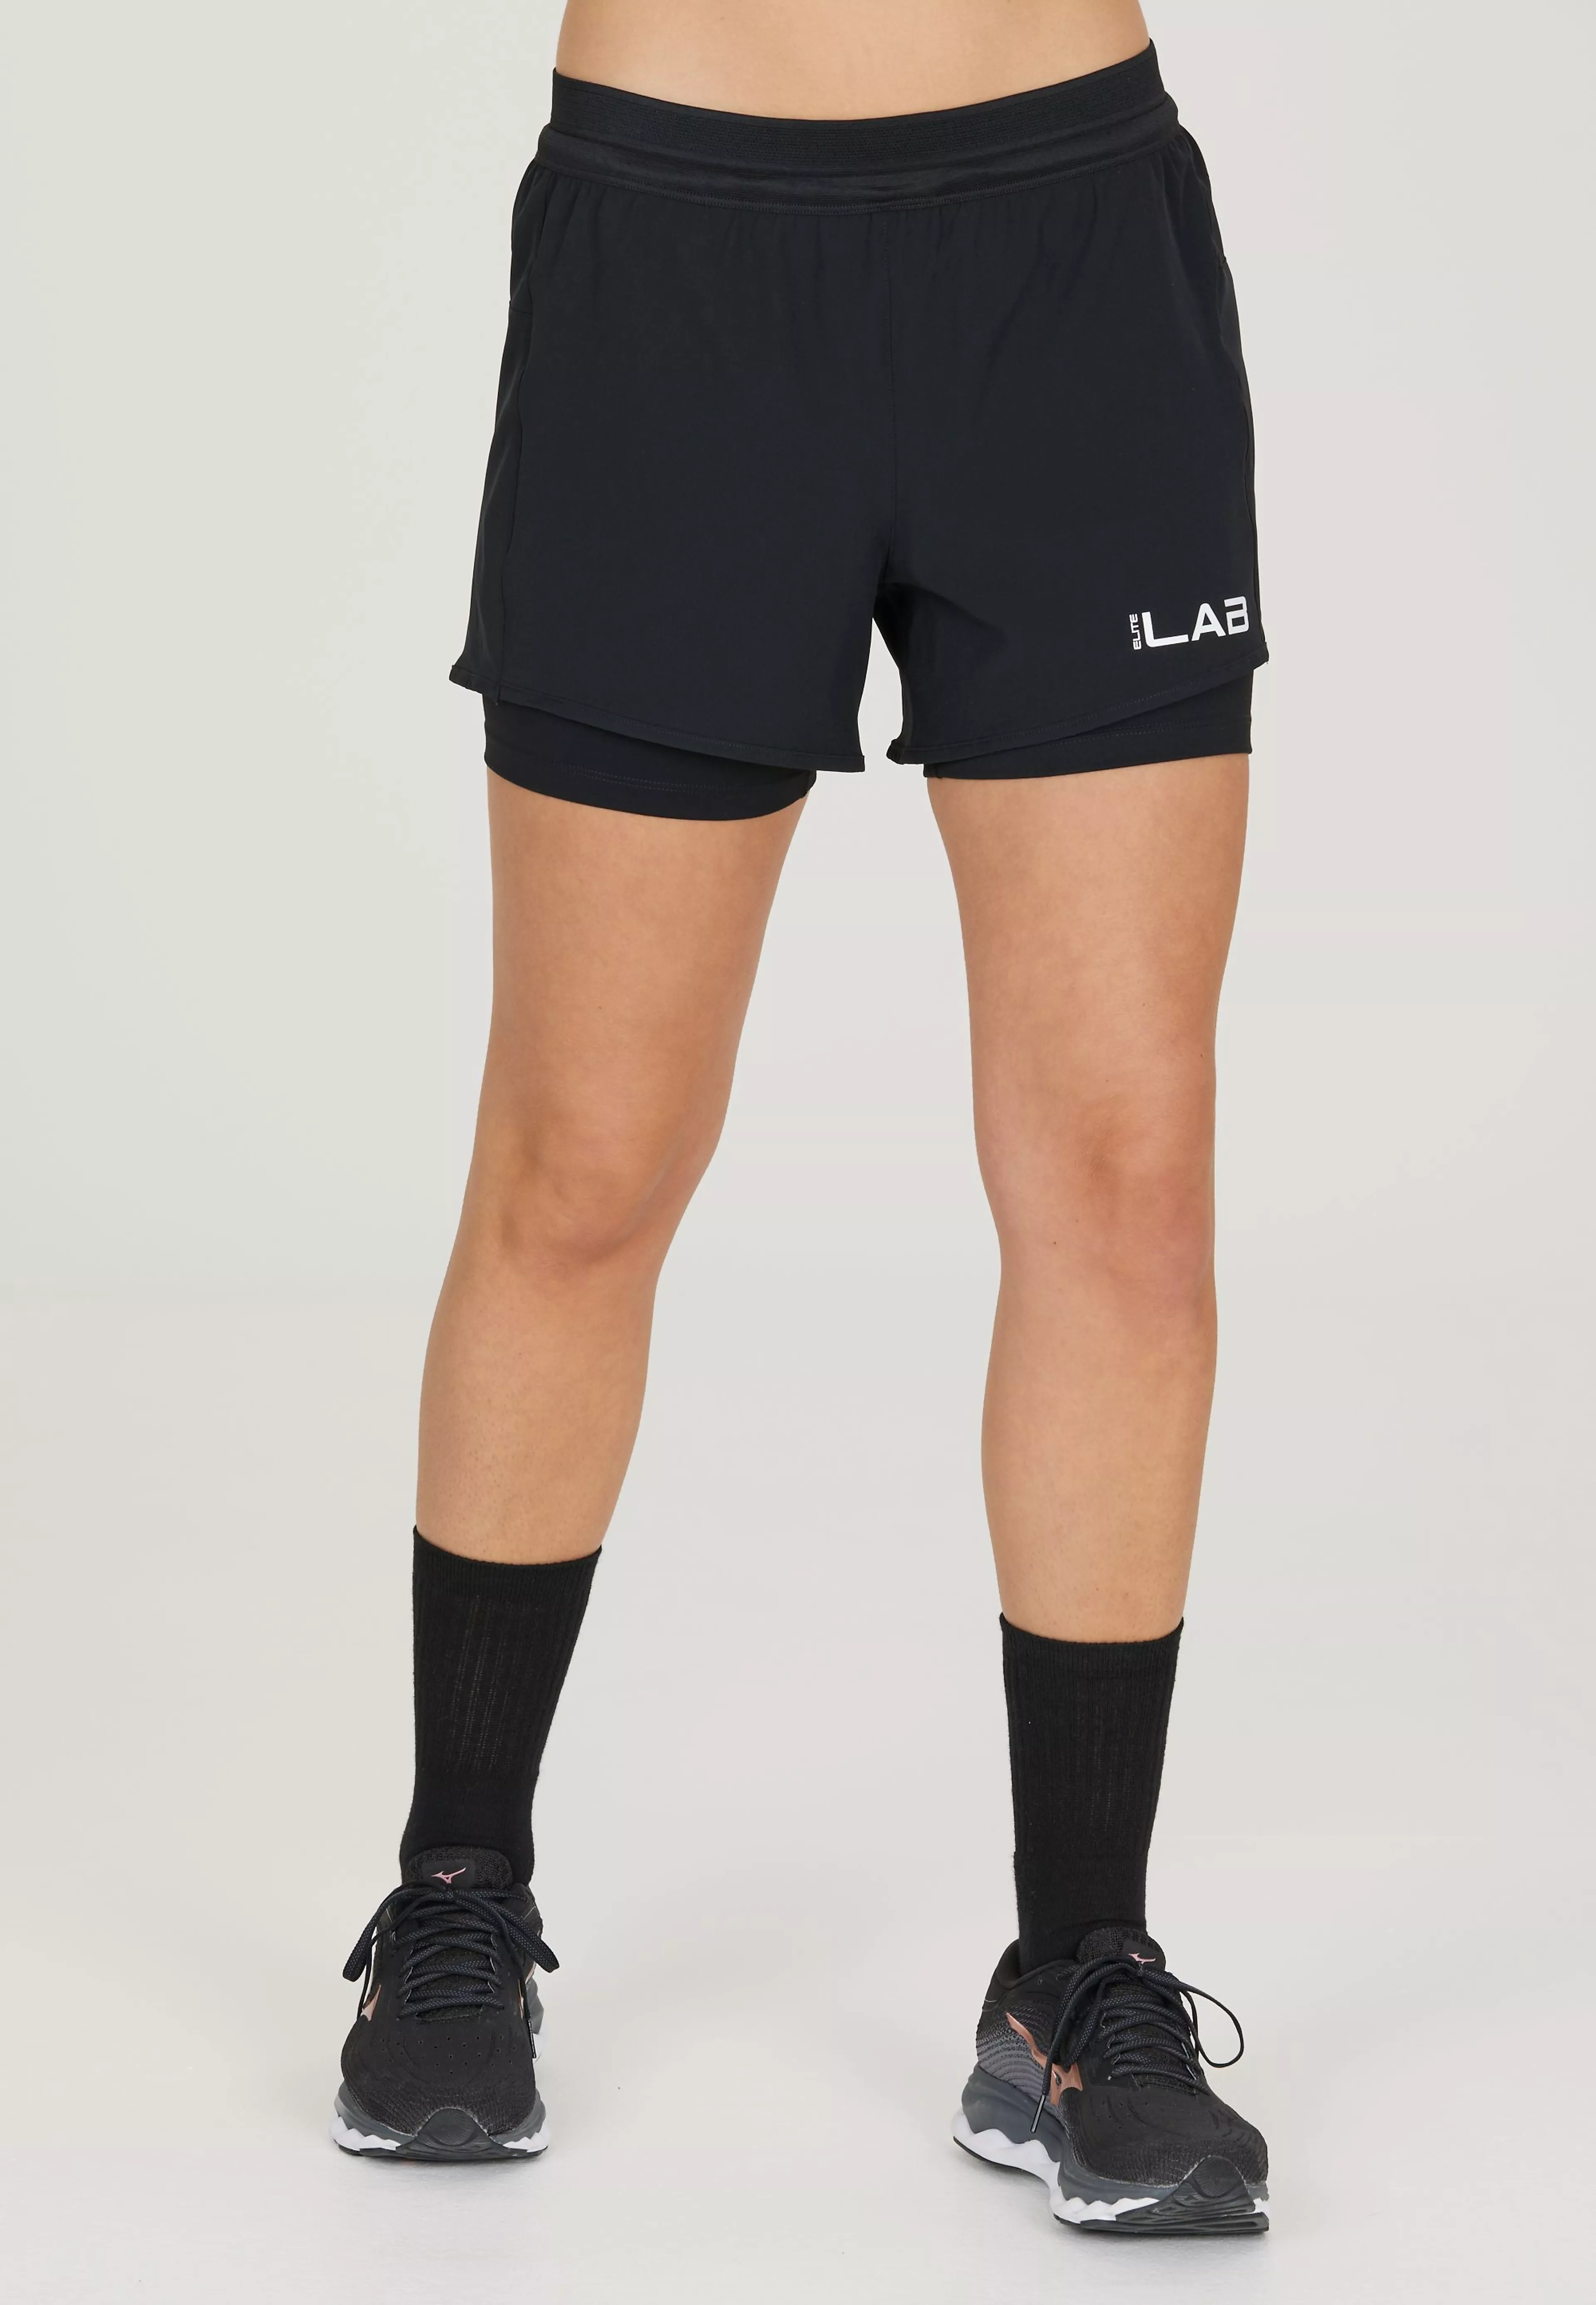 Elite Lab Core Lightweight 2-in-1 Shorts